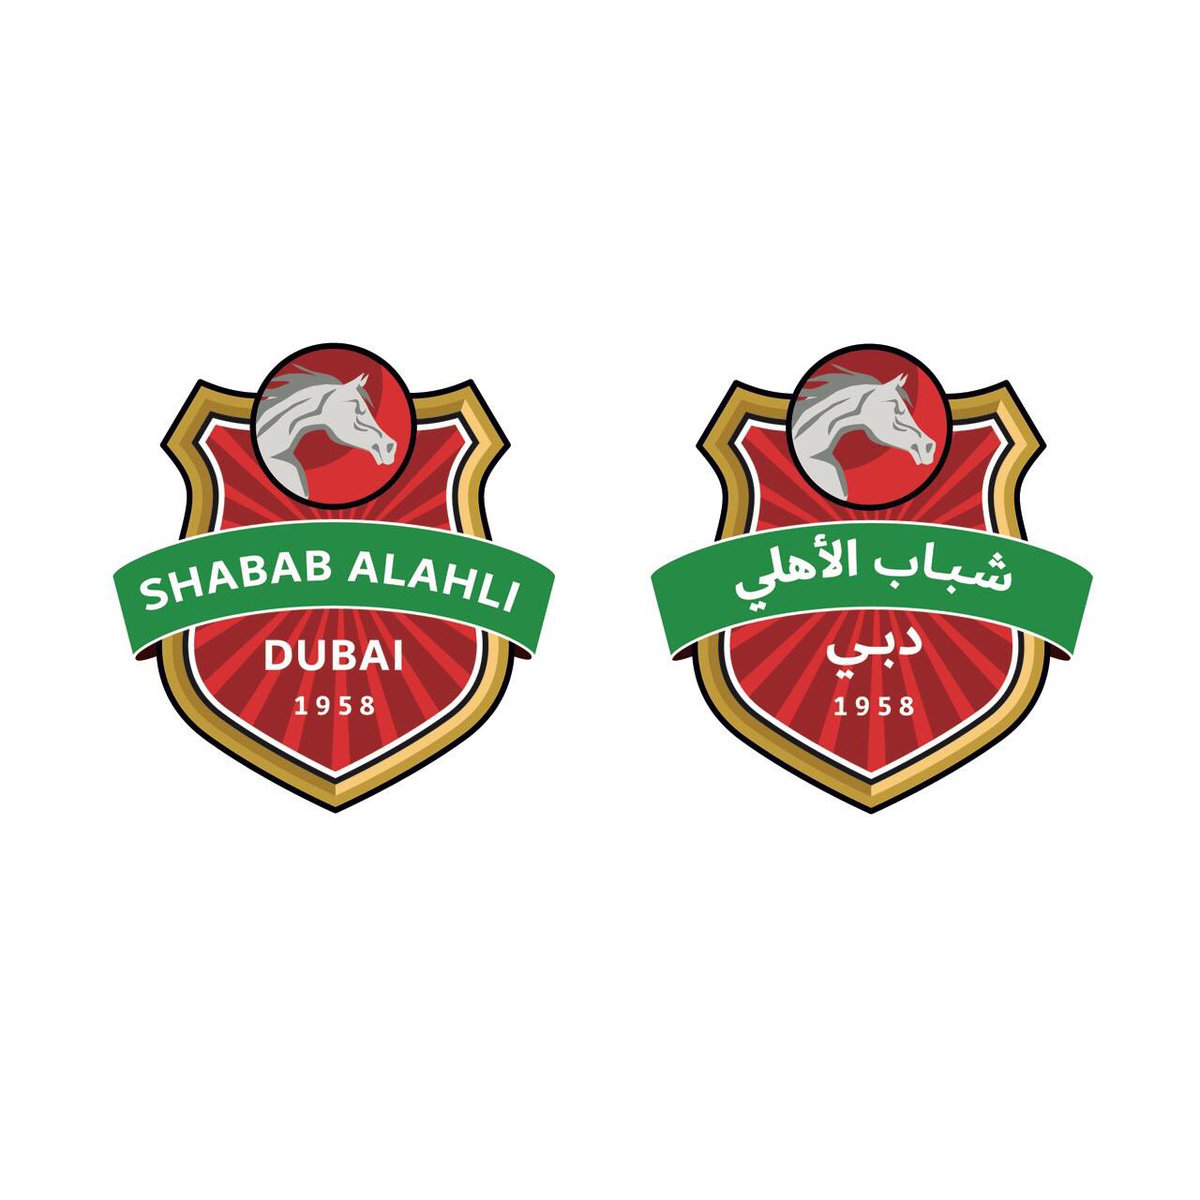 Arabian Gulf League: Three clubs in Dubai to merge  Ghana